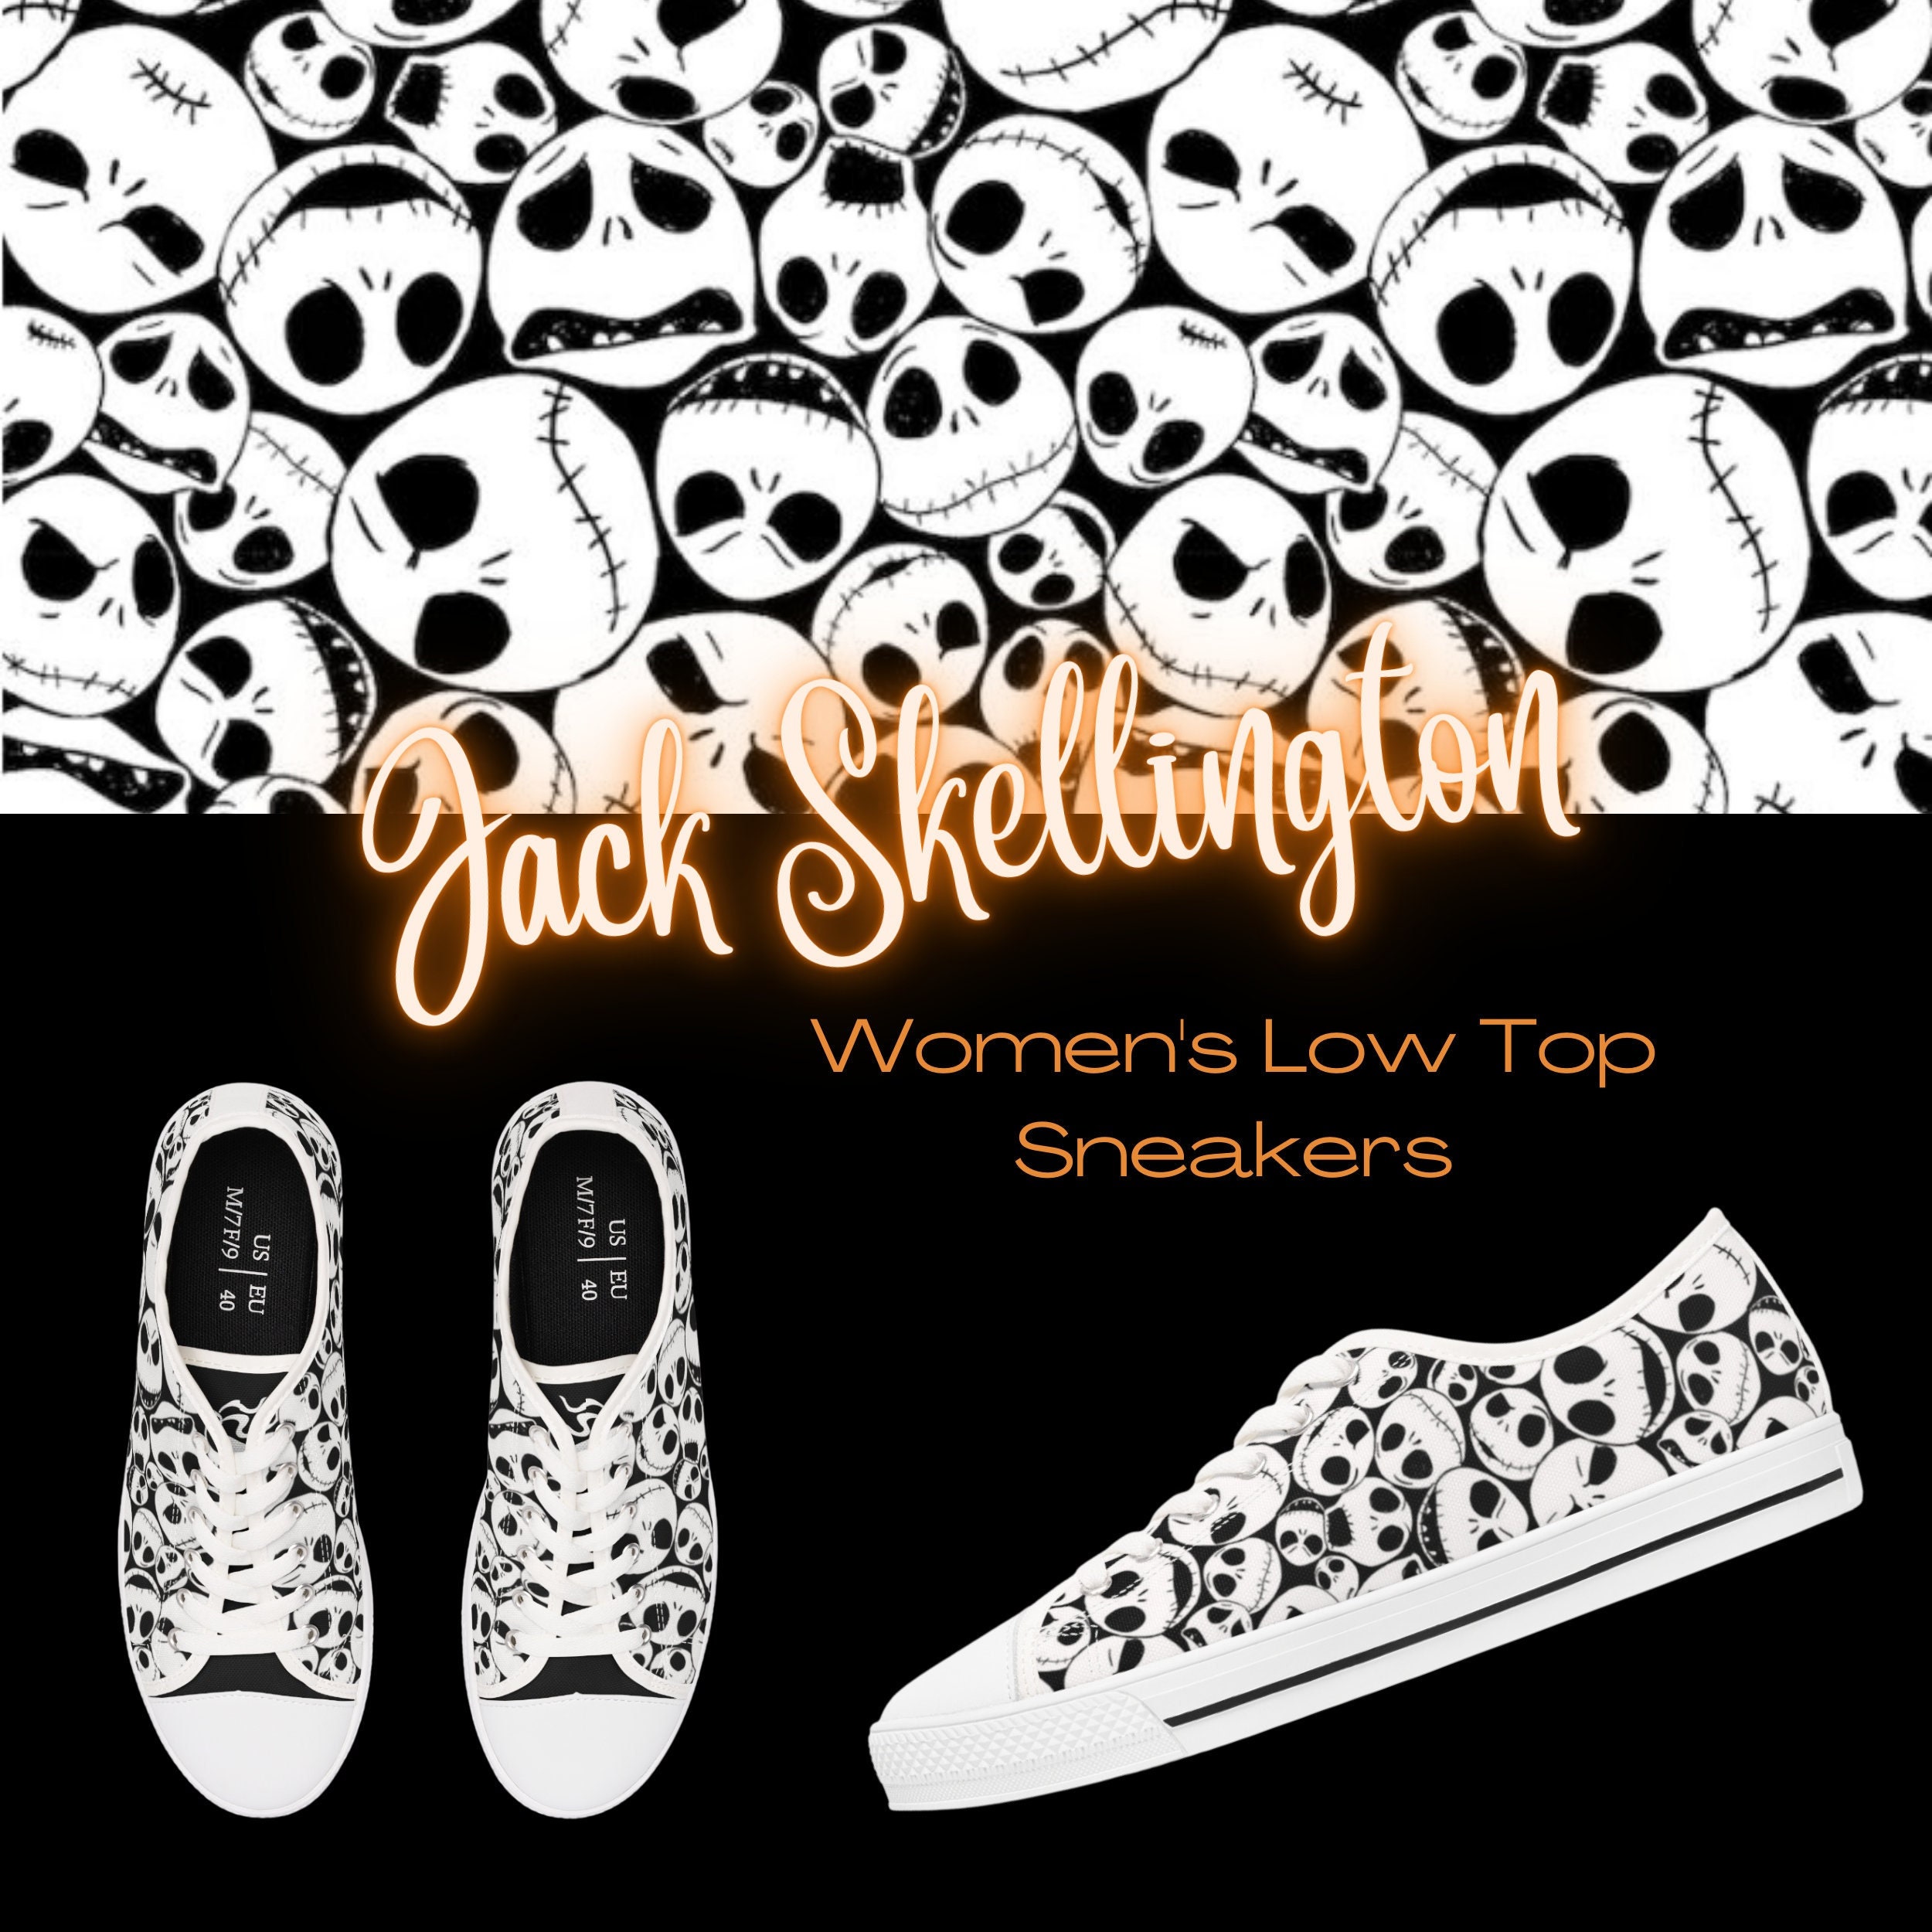 Discover Nightmare Before Christmas Jack Skellington Women's Low Top Sneakers